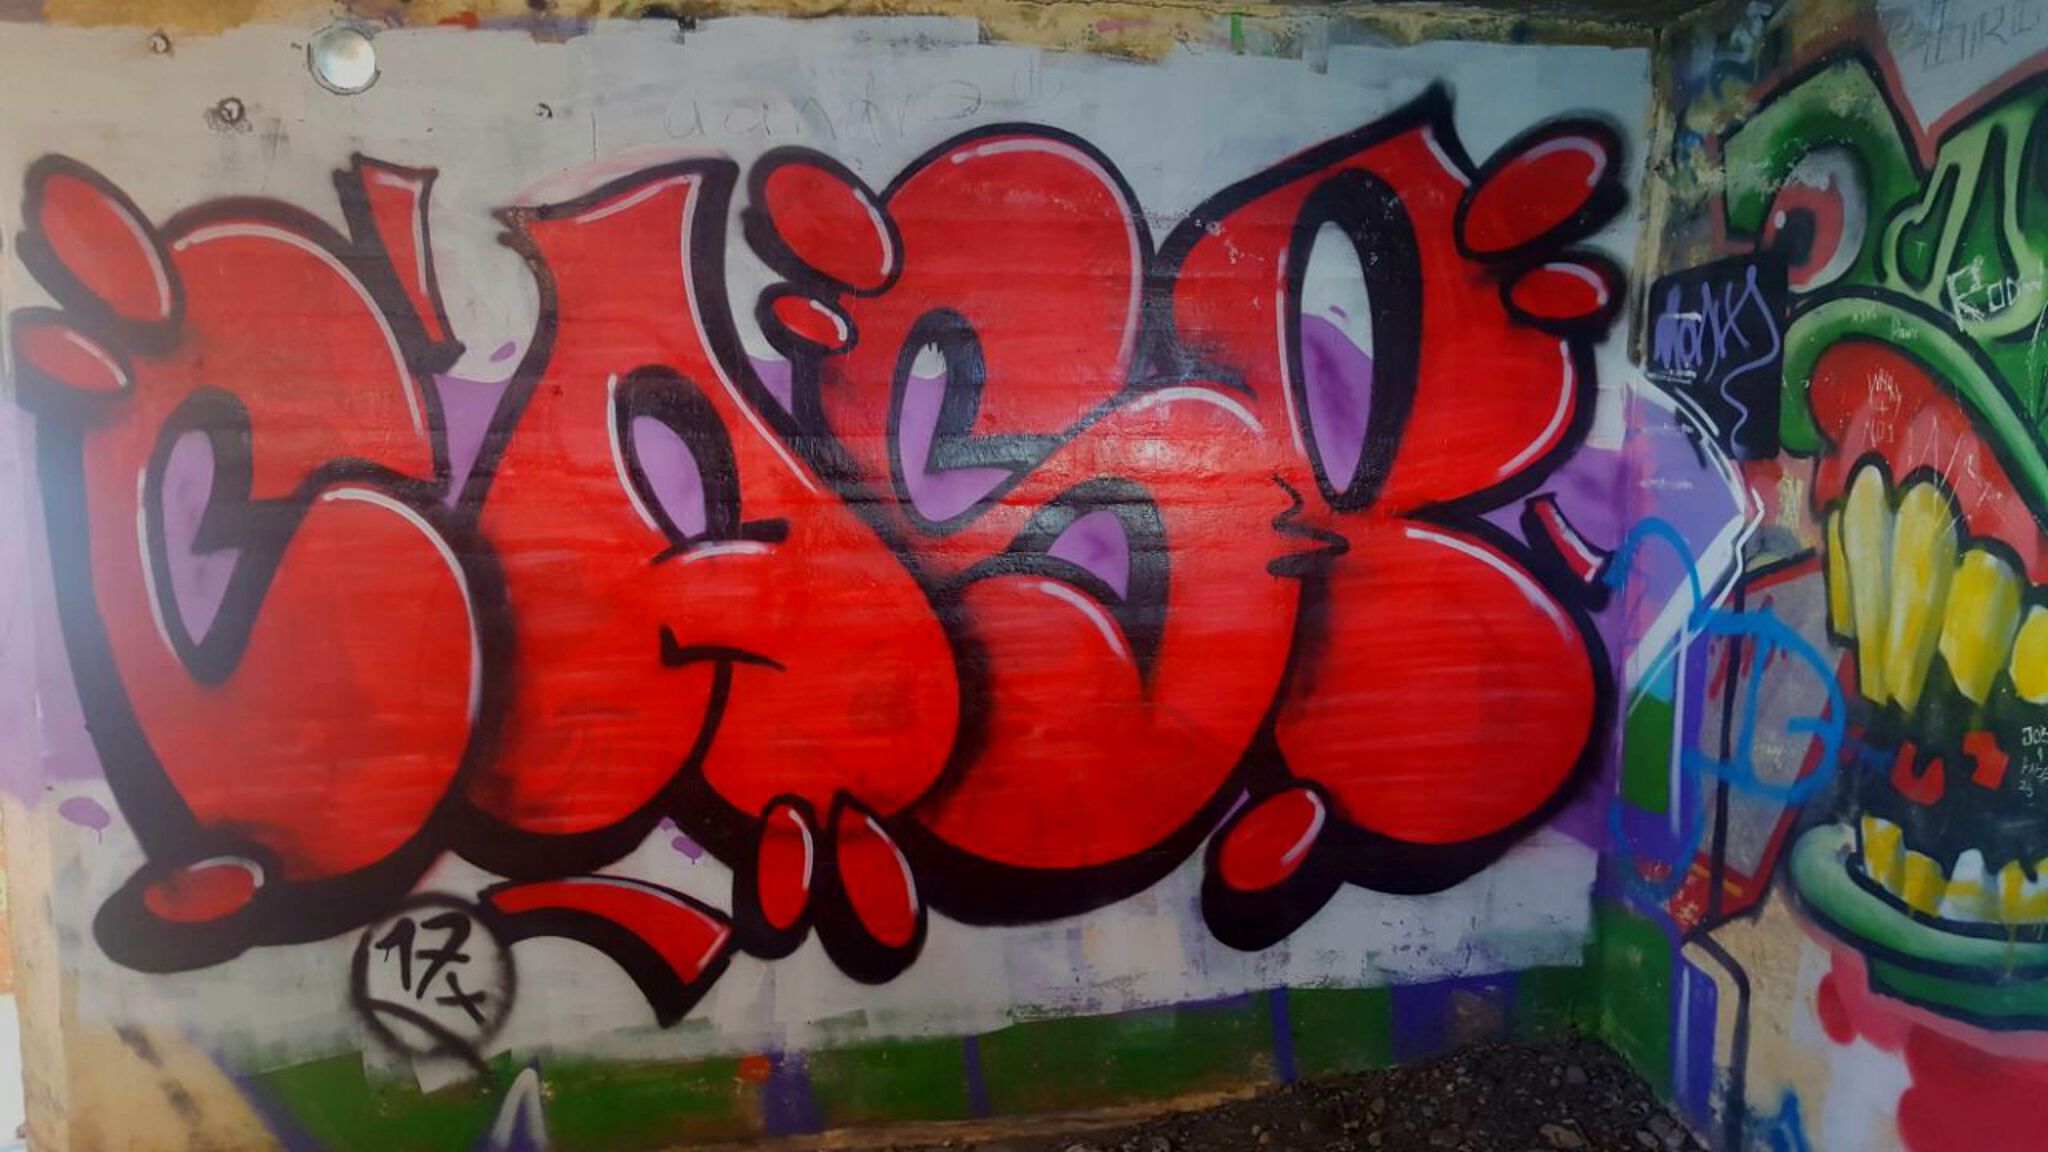 &mdash;Slangkop Graffiti 